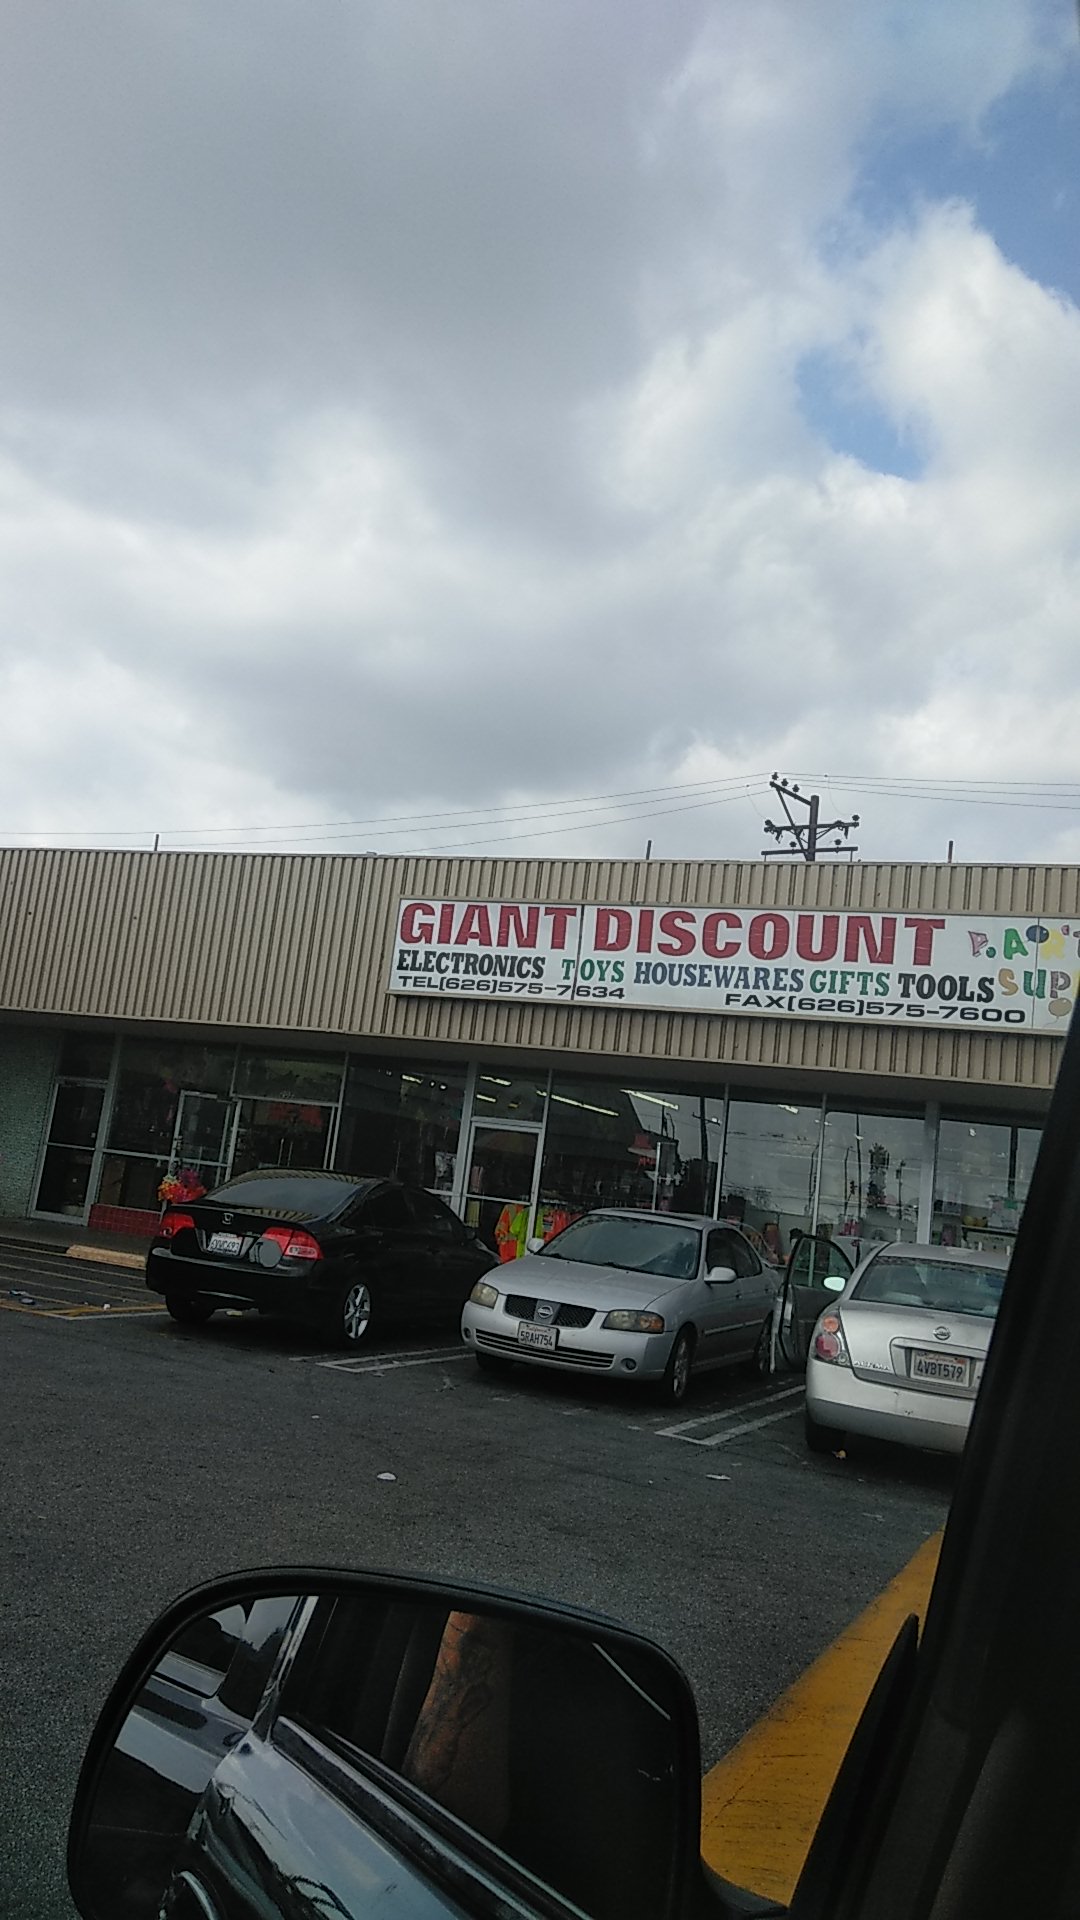 Giant Discount